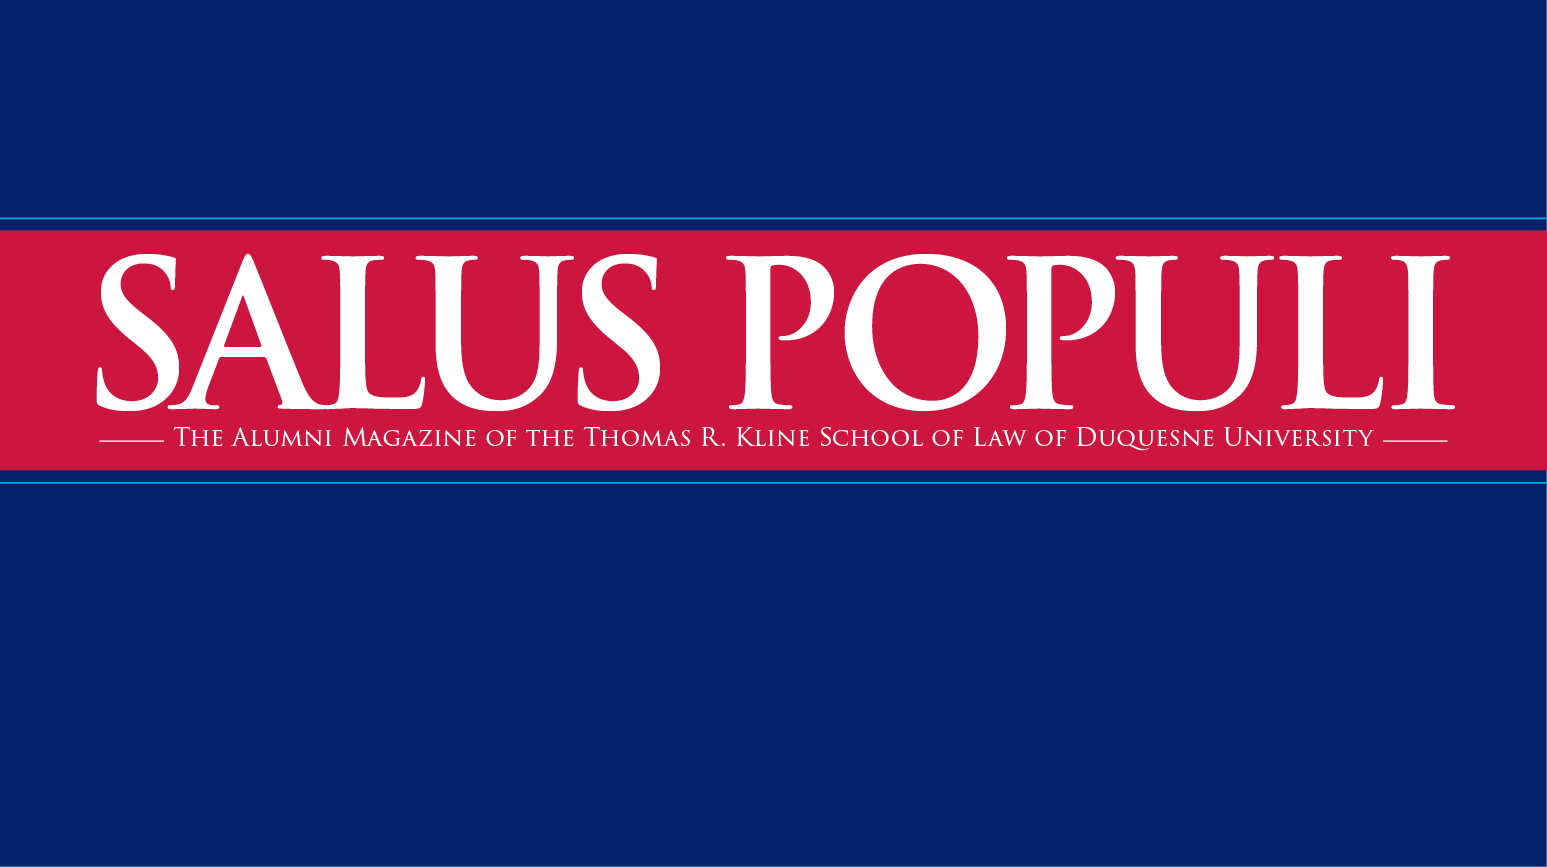 Salus Populi: The Alumni Magazine of the Thomas R. Kline School of Law of Duquesne University